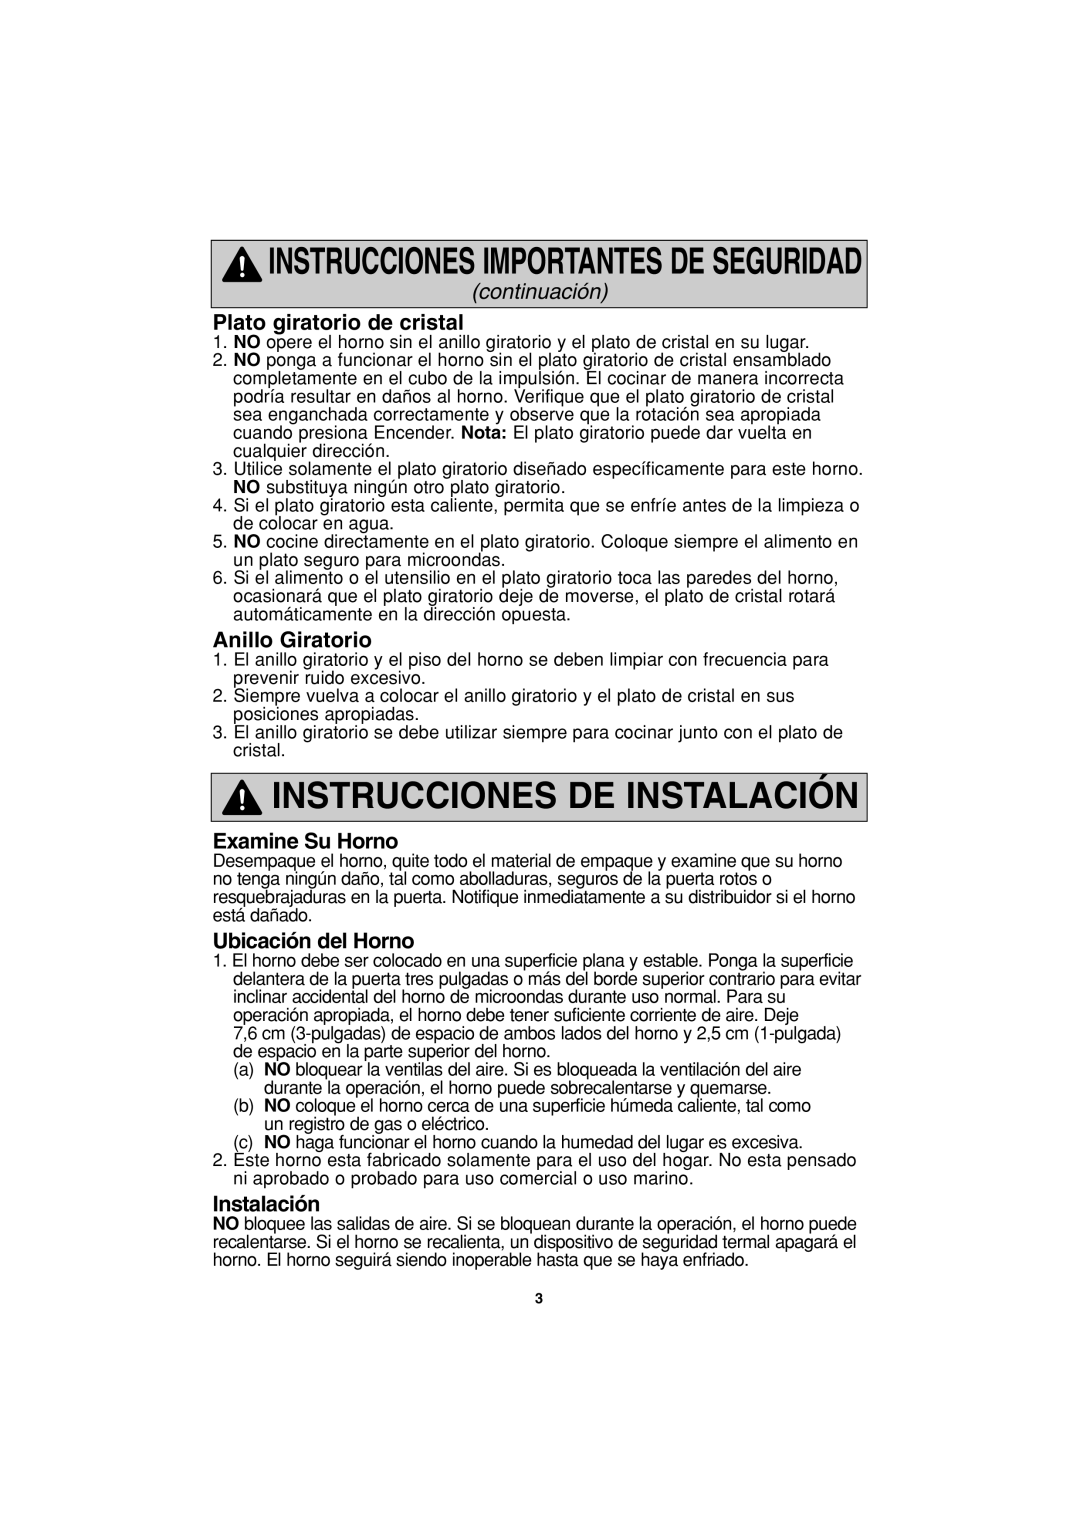 Panasonic NN-S423 Instrucciones De Instalación, Plato giratorio de cristal, Anillo Giratorio, Examine Su Horno 